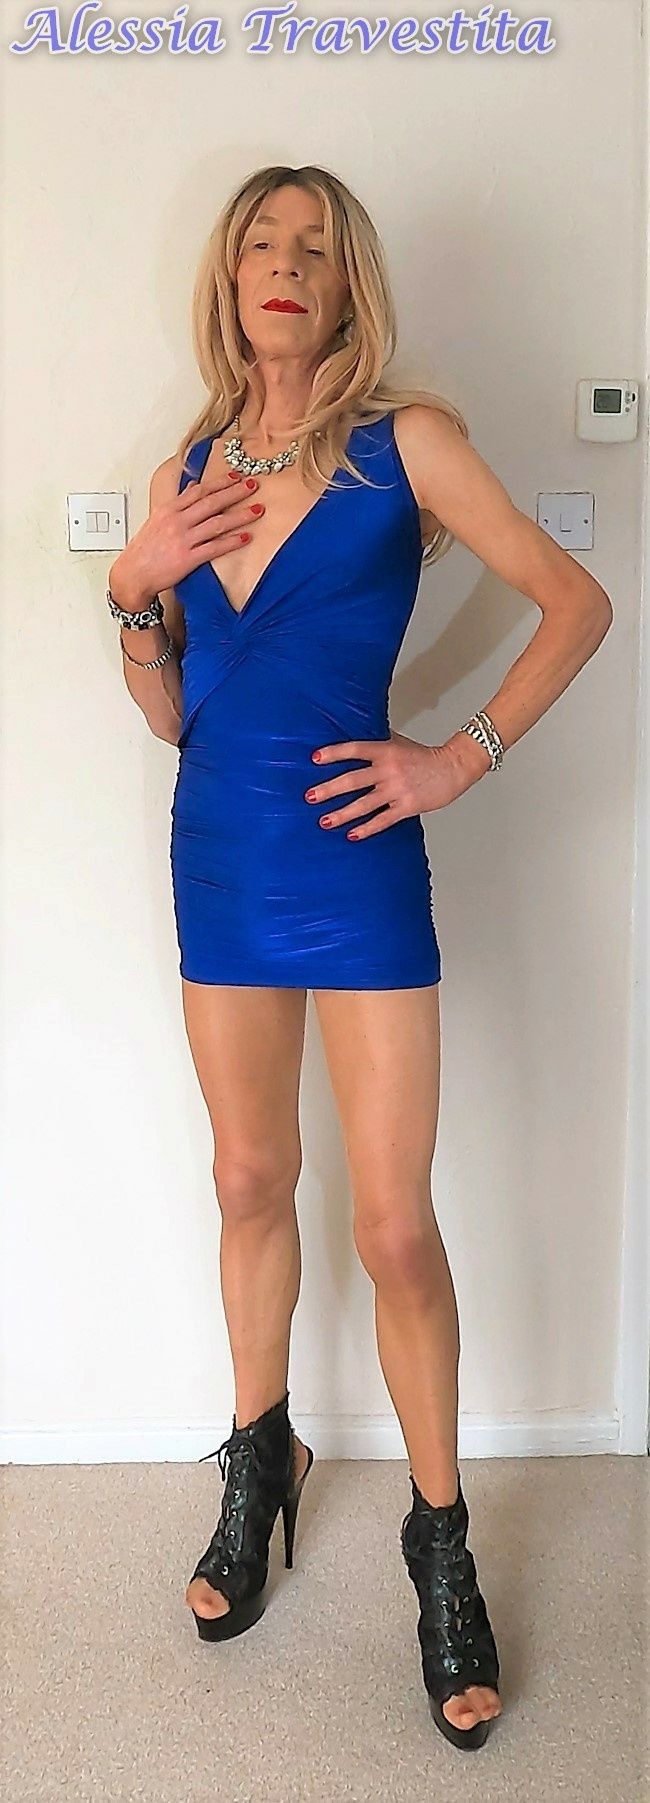 77 Alessia Travestita in Blue Italian Designer Dress #41